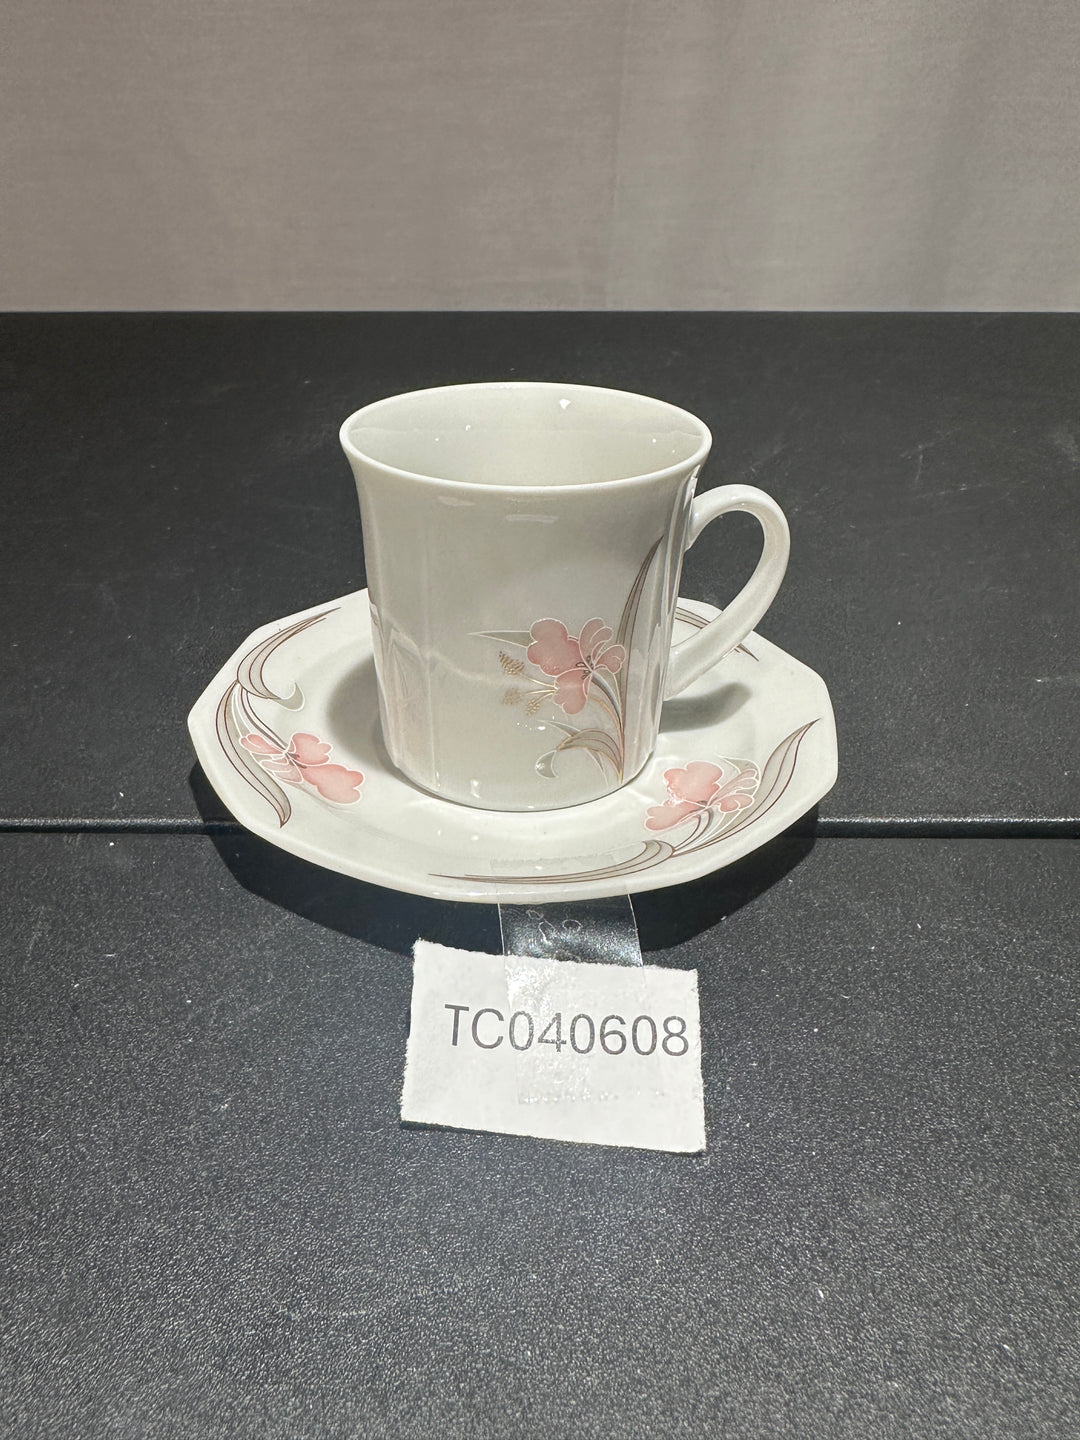 Tea Cup TC040608